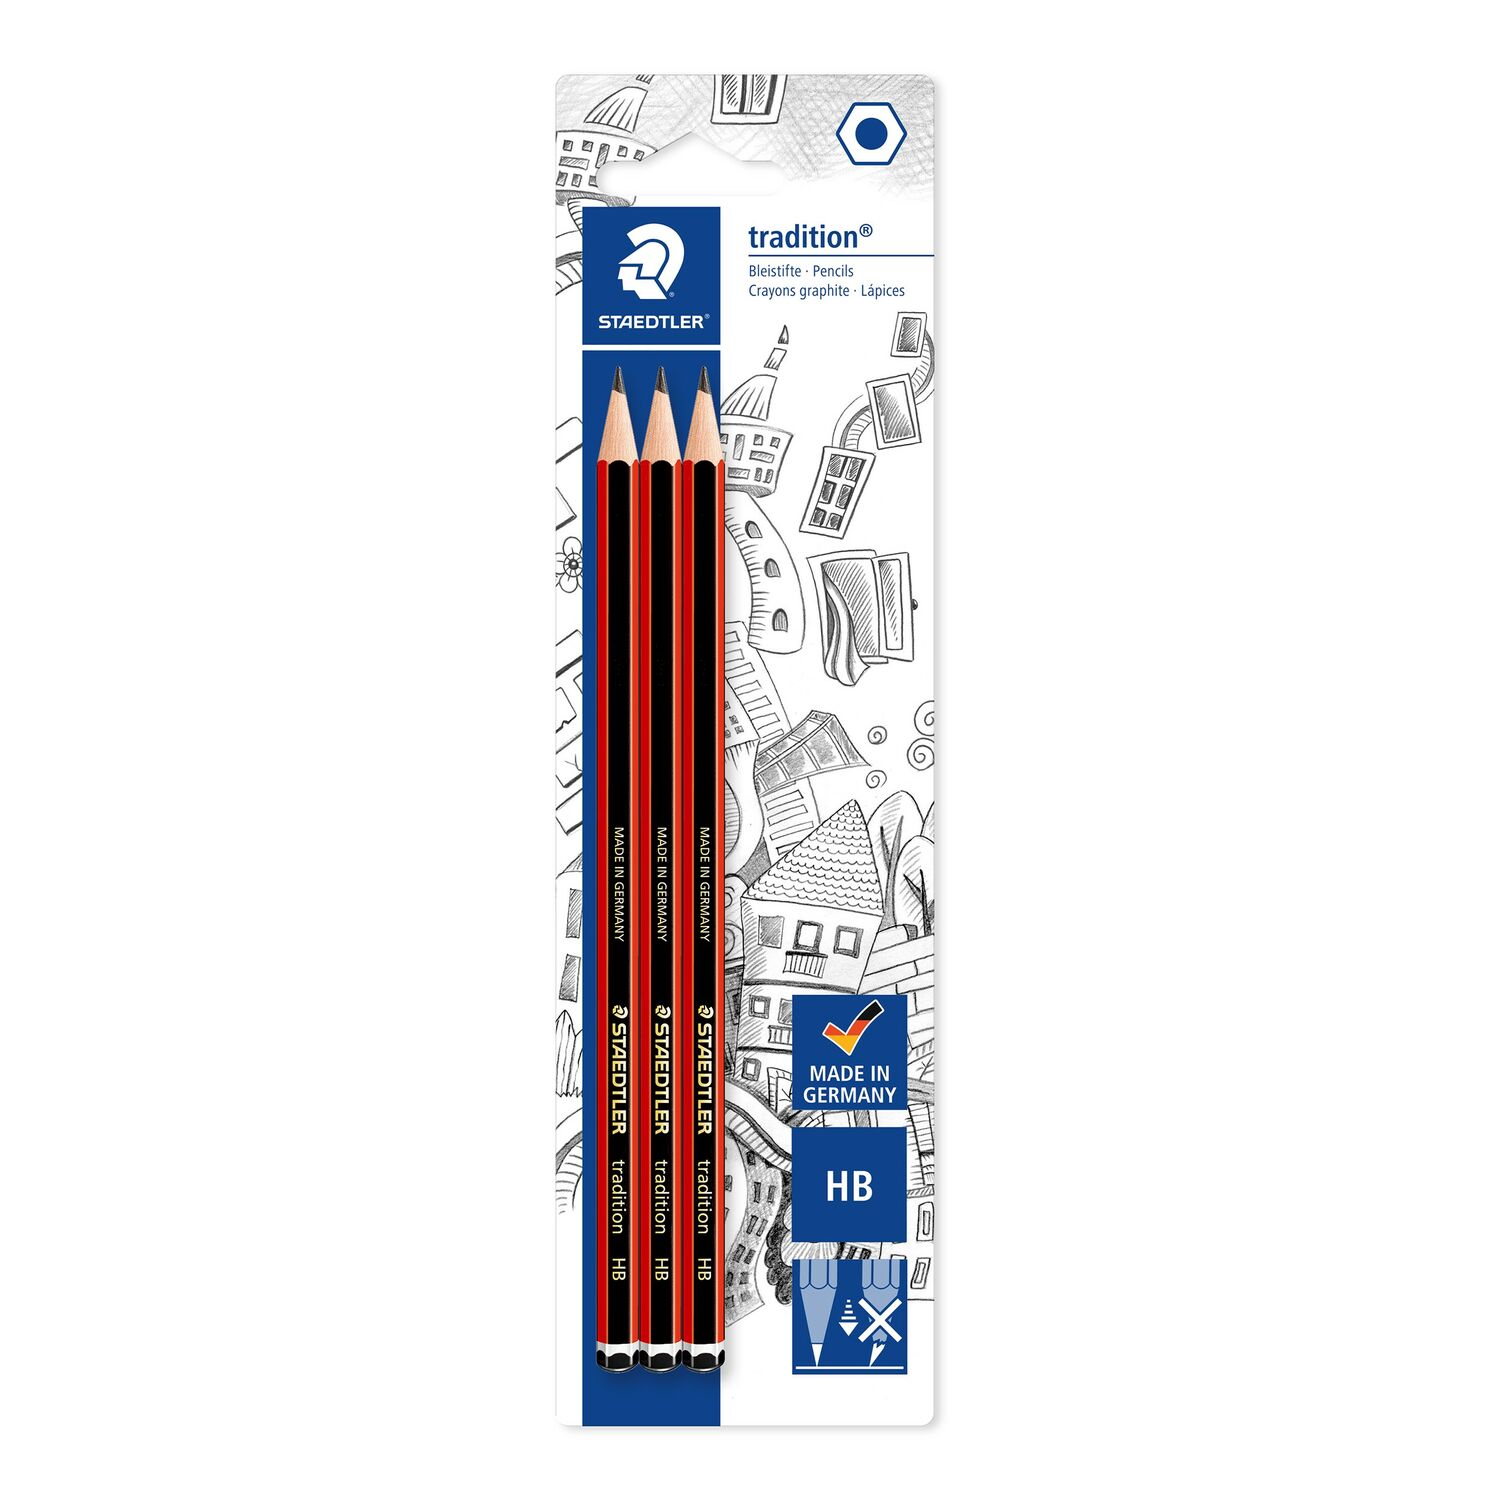 HB STAEDLER Tradition 110 Graphite Pencil with Eraser 